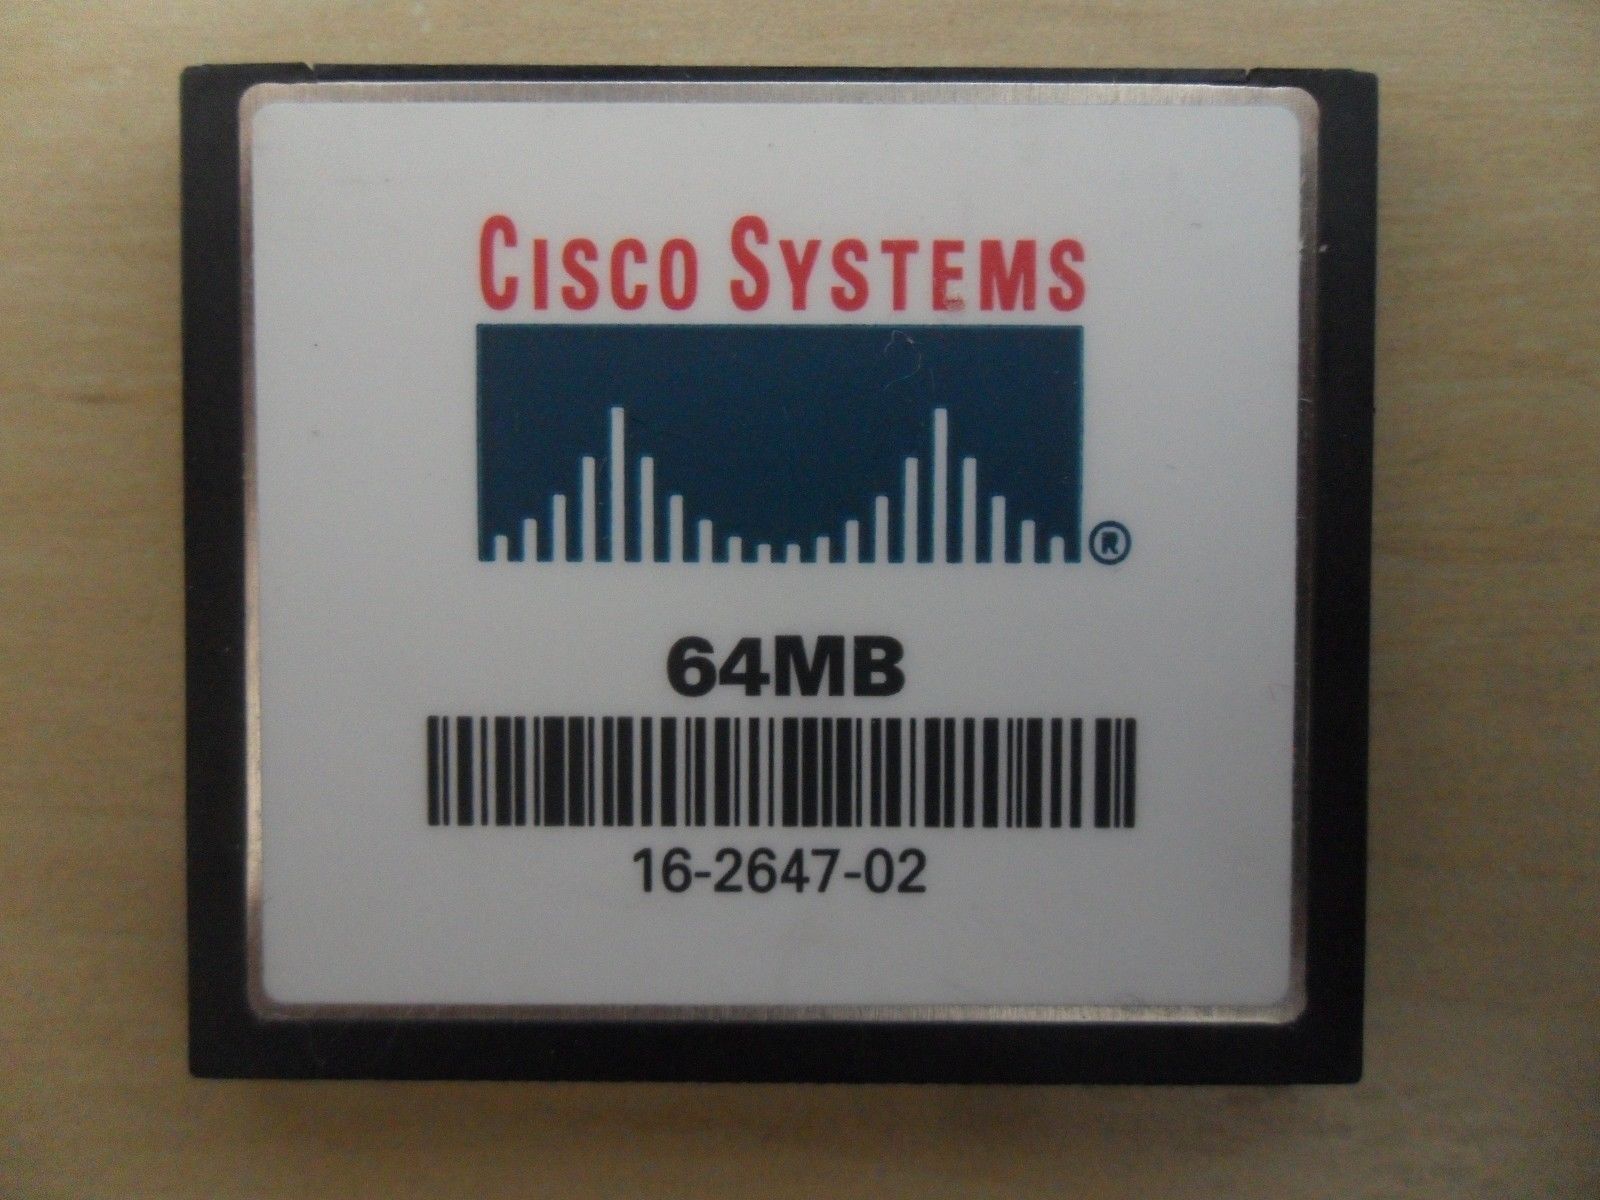 Cisco 64 Mb Cf Compact Flash Memory Card 2801 2811 2821 2851 3825 3845 2900 3900